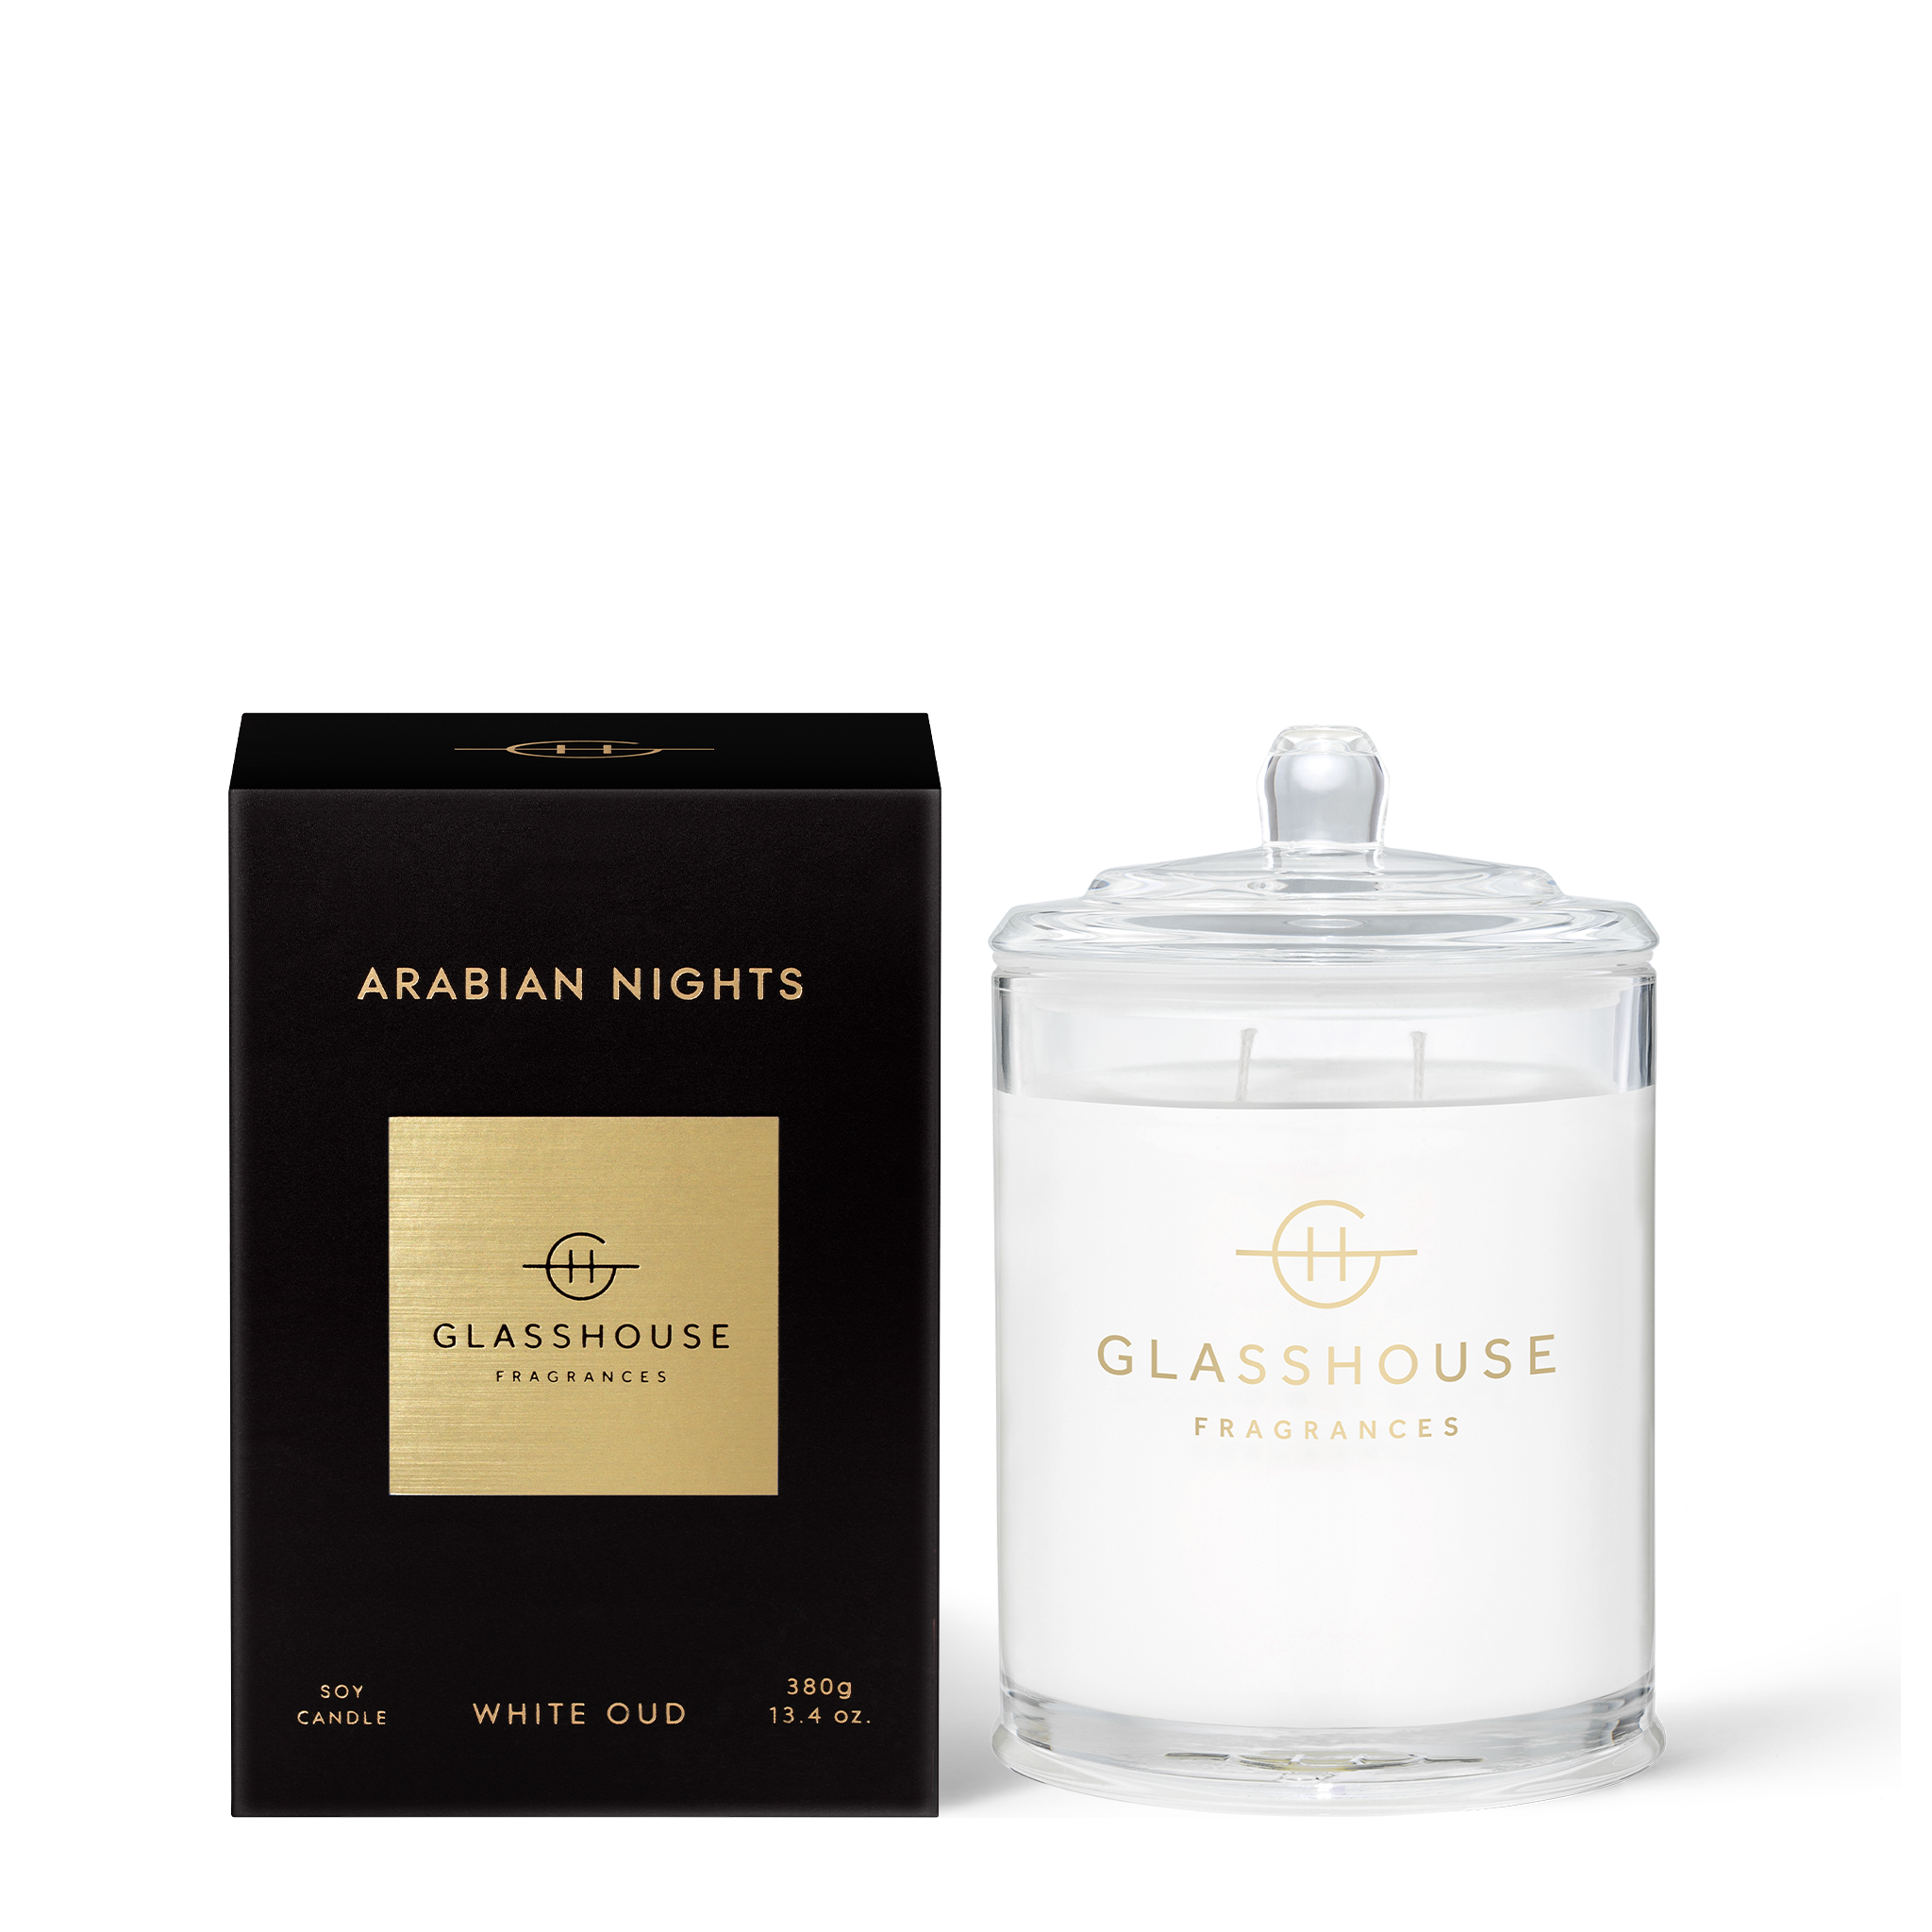 Glasshouse Fragrances 380g Soy Candle - ARABIAN NIGHTS - White Oud